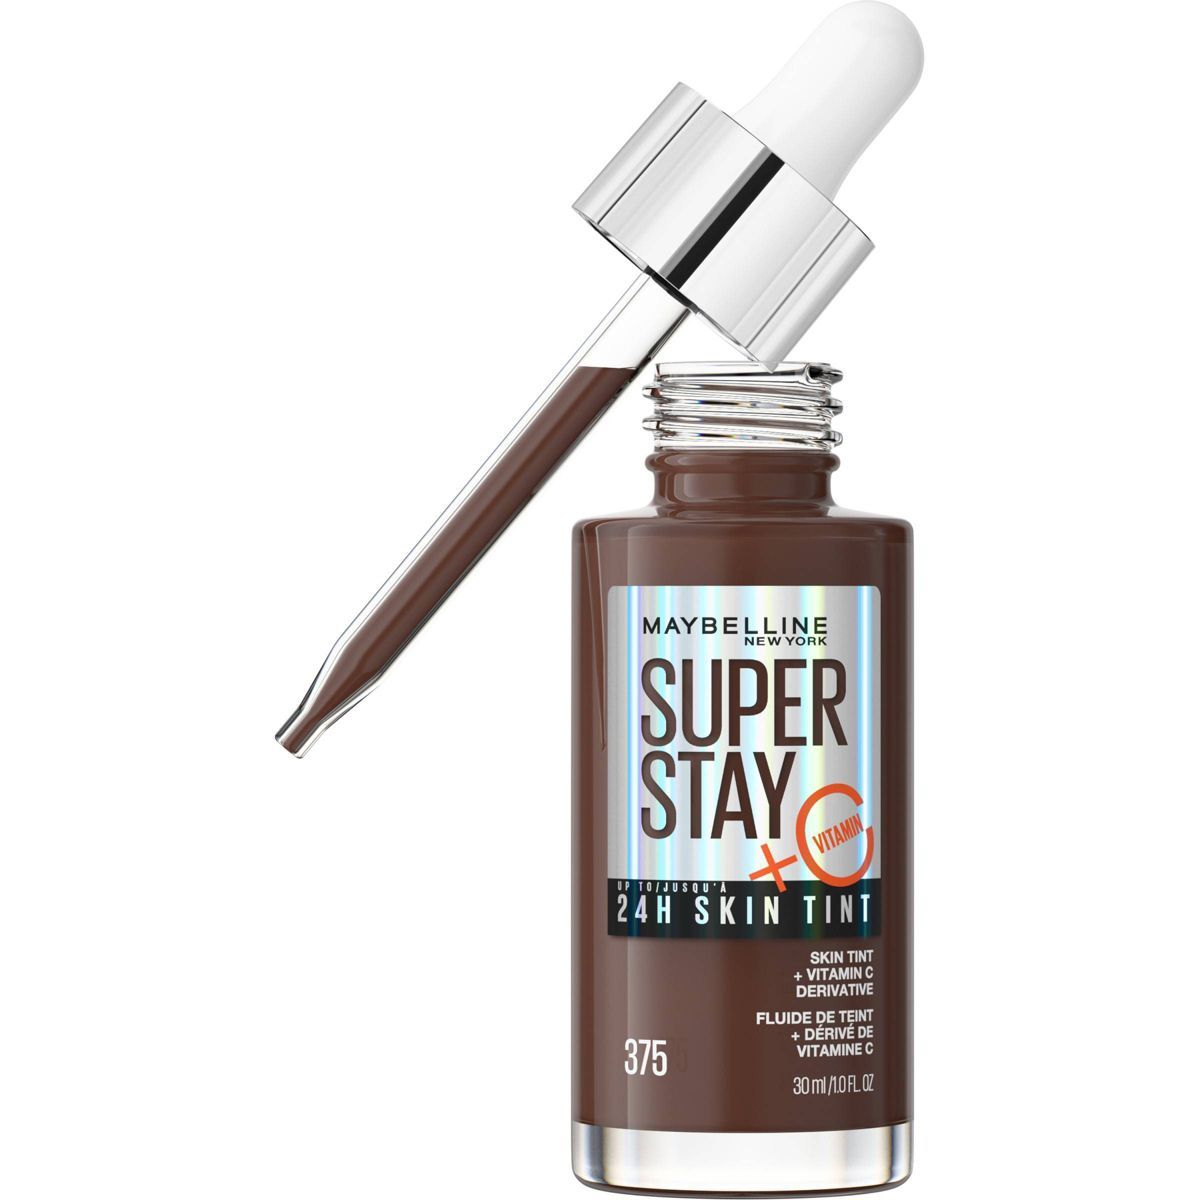 Maybelline Super Stay 24HR Skin Tint Foundation Serum with Vitamin C - 1 fl oz | Target